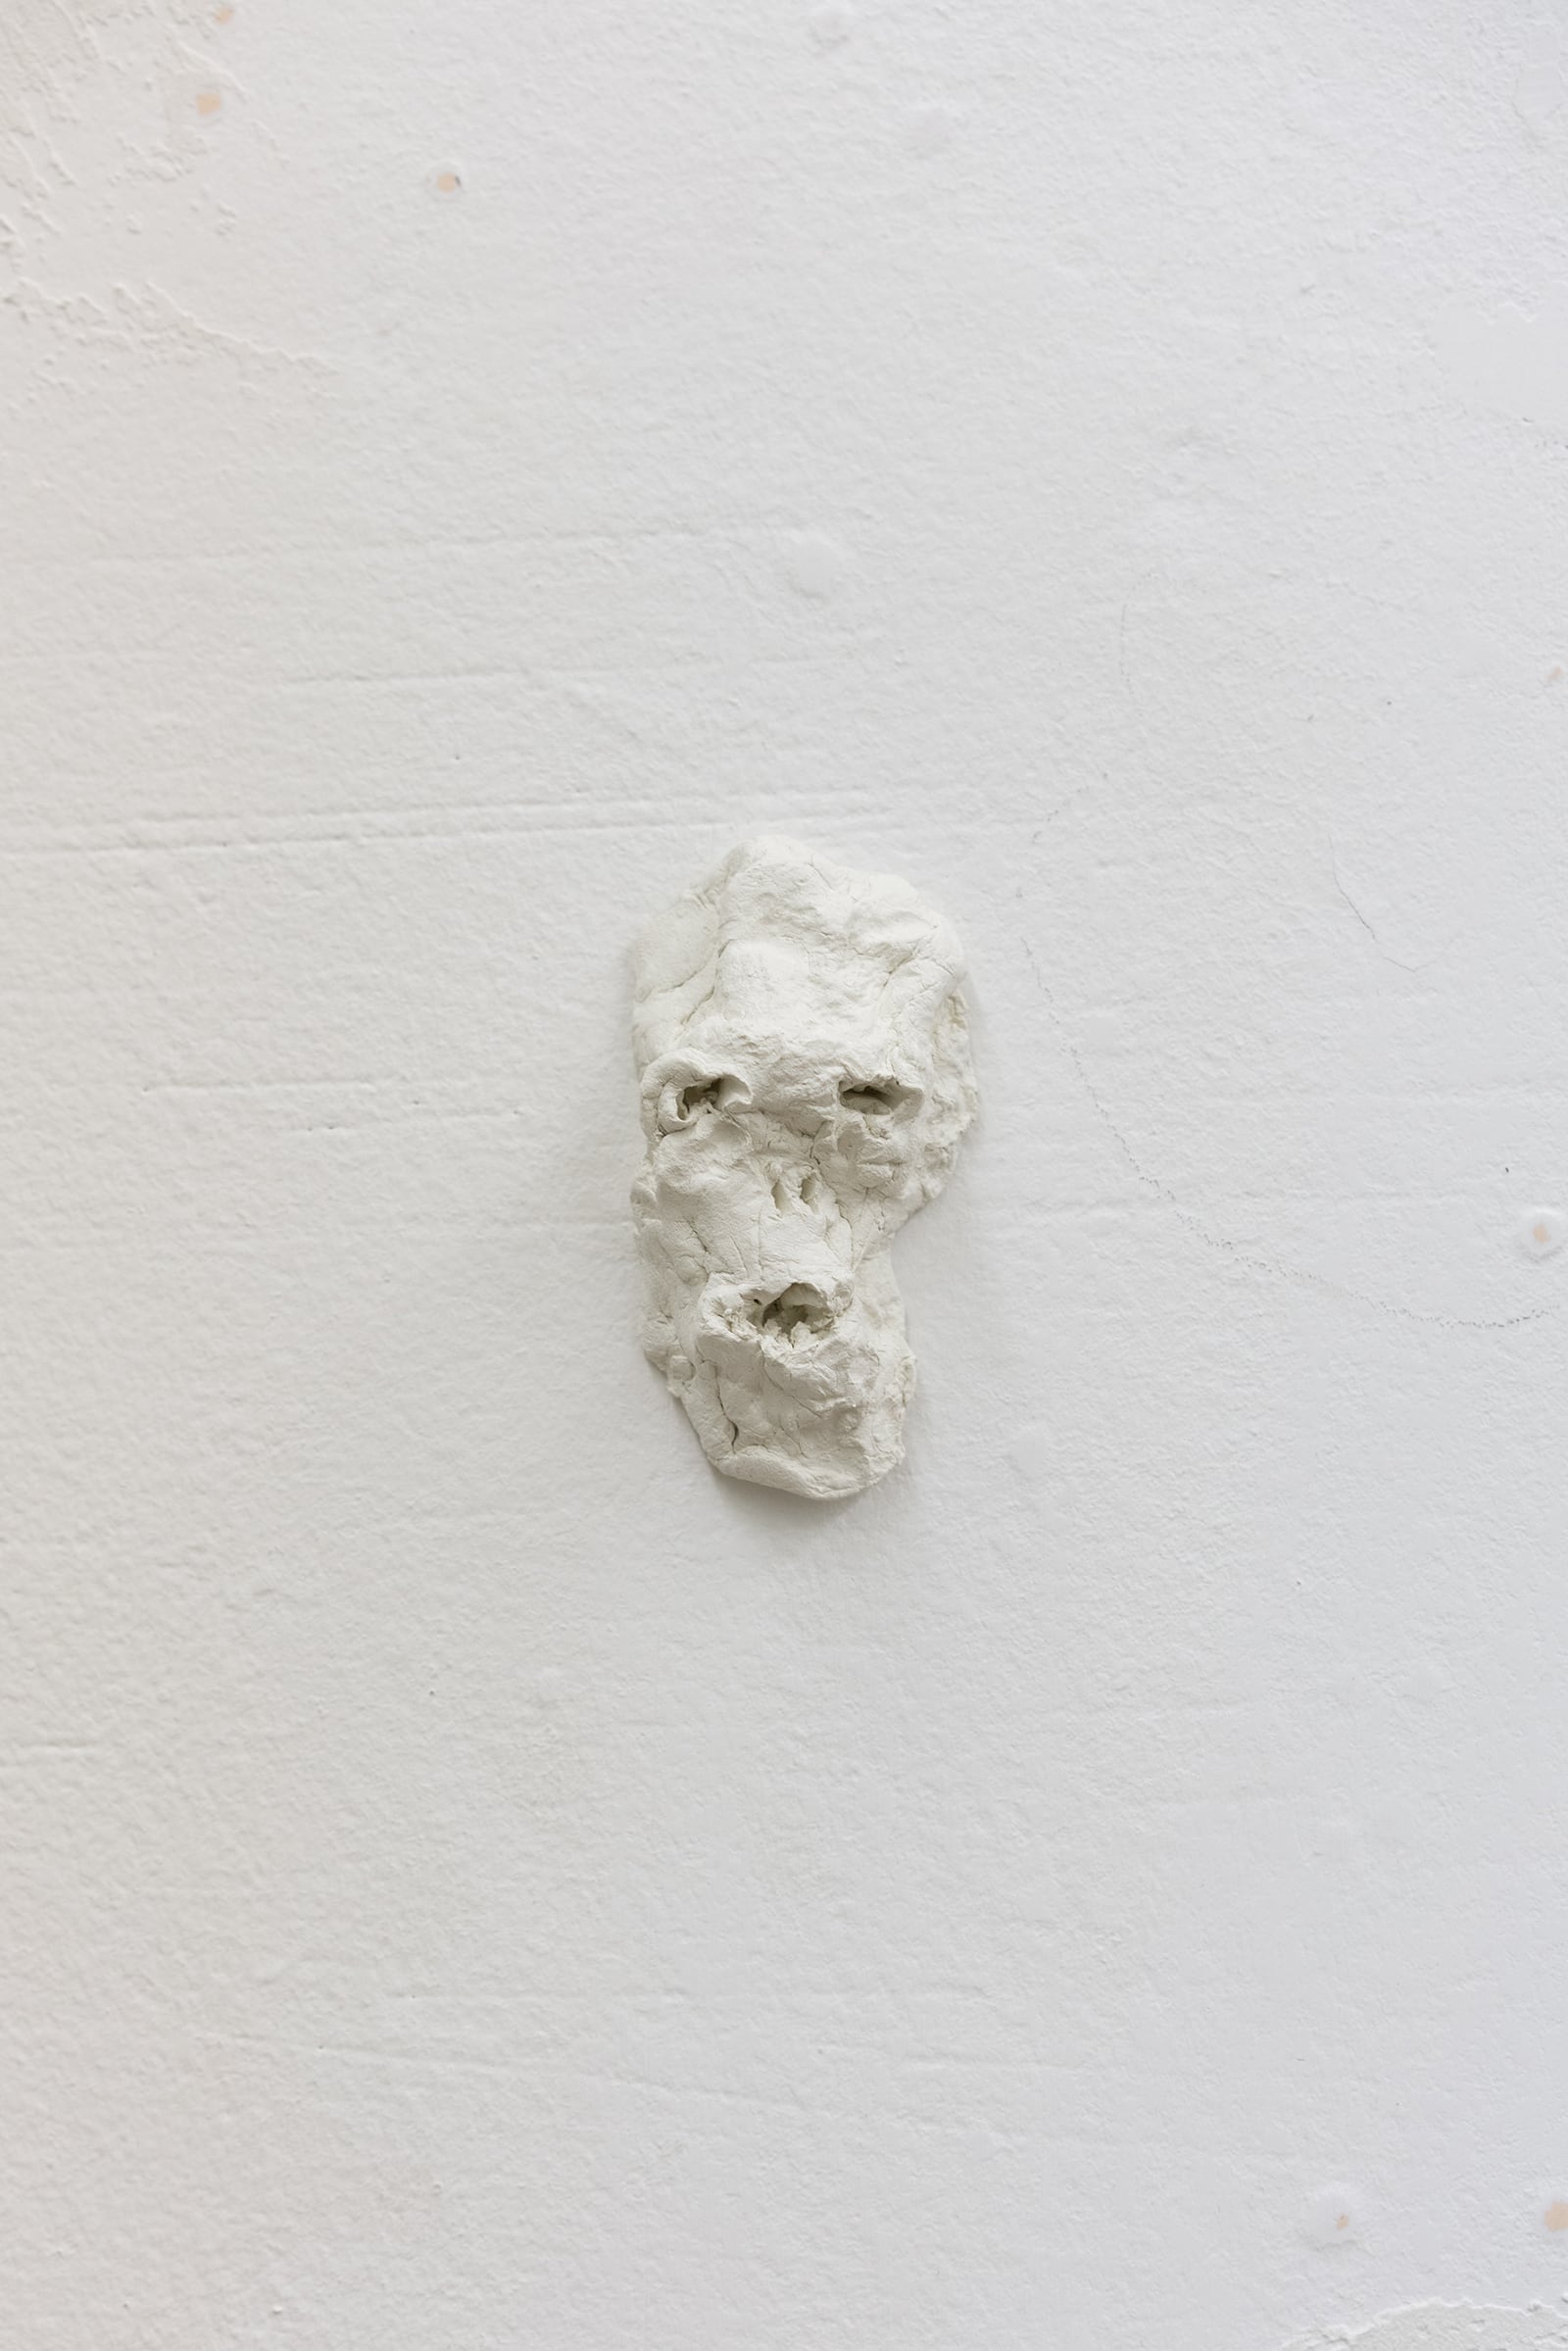 Olga Paramonova, Inside the skull of a mannequin, 2022, polymer clay, 4 x 6 x 10 cm